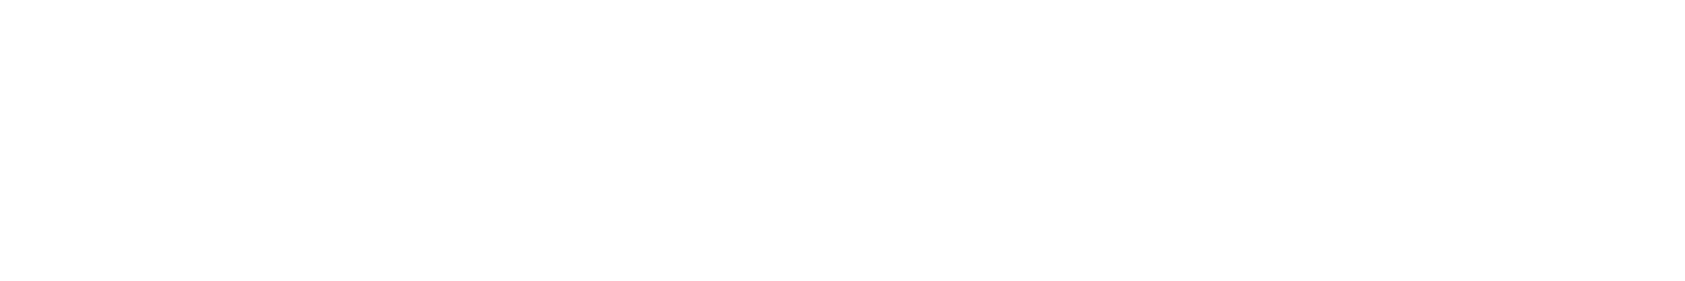 valley court diversion programs white logo